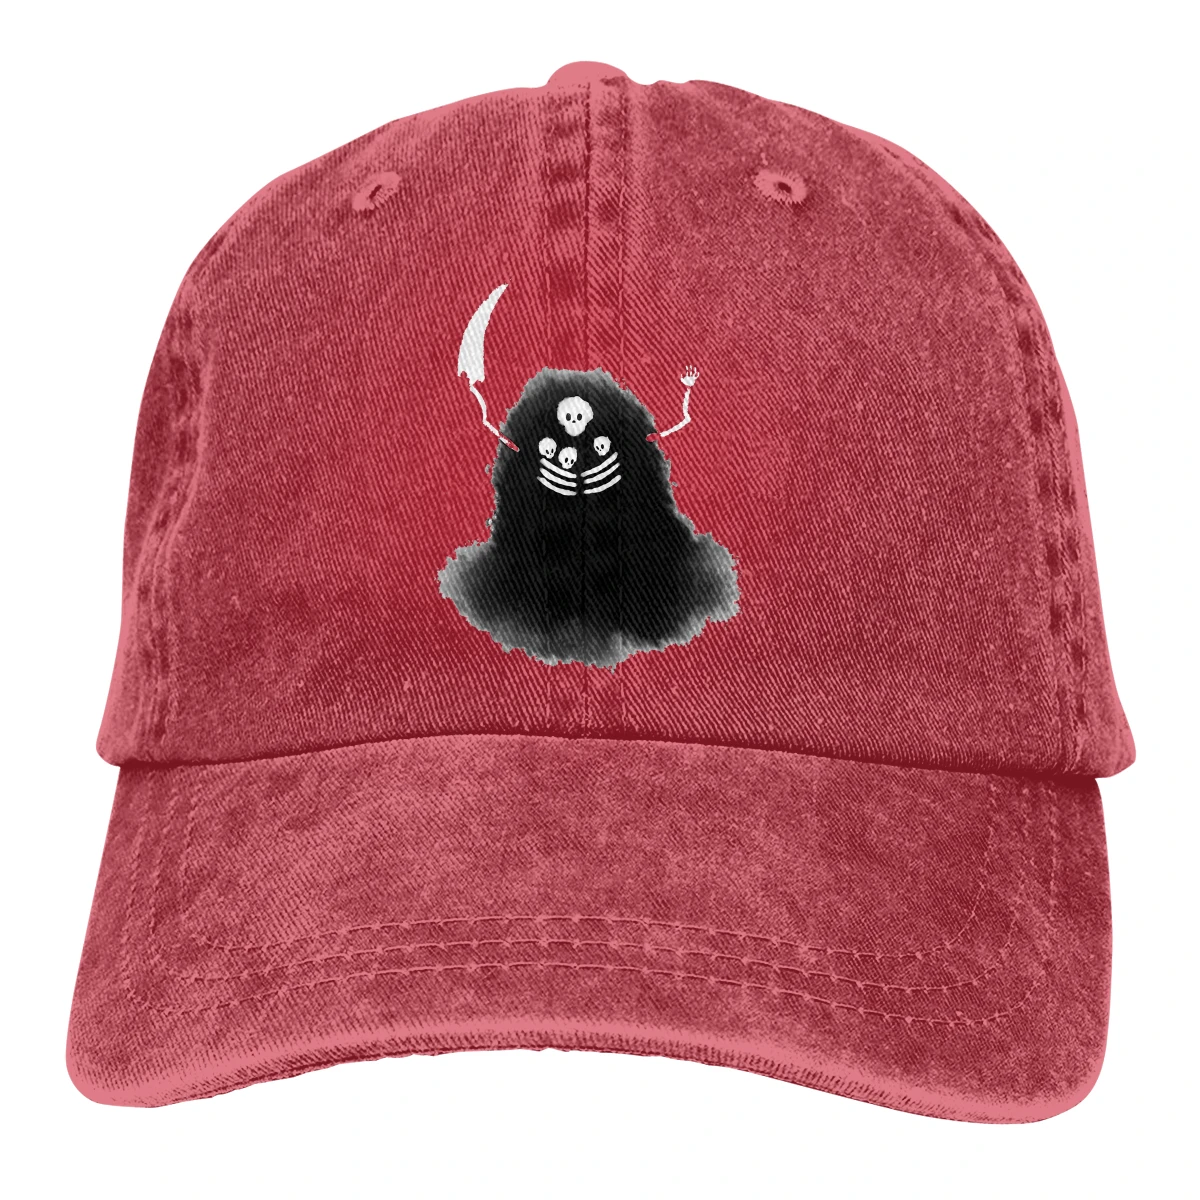 

Real Nito The Baseball Cap Peaked capt Sport Unisex Outdoor Custom Dark Soul Demon's Souls Hats